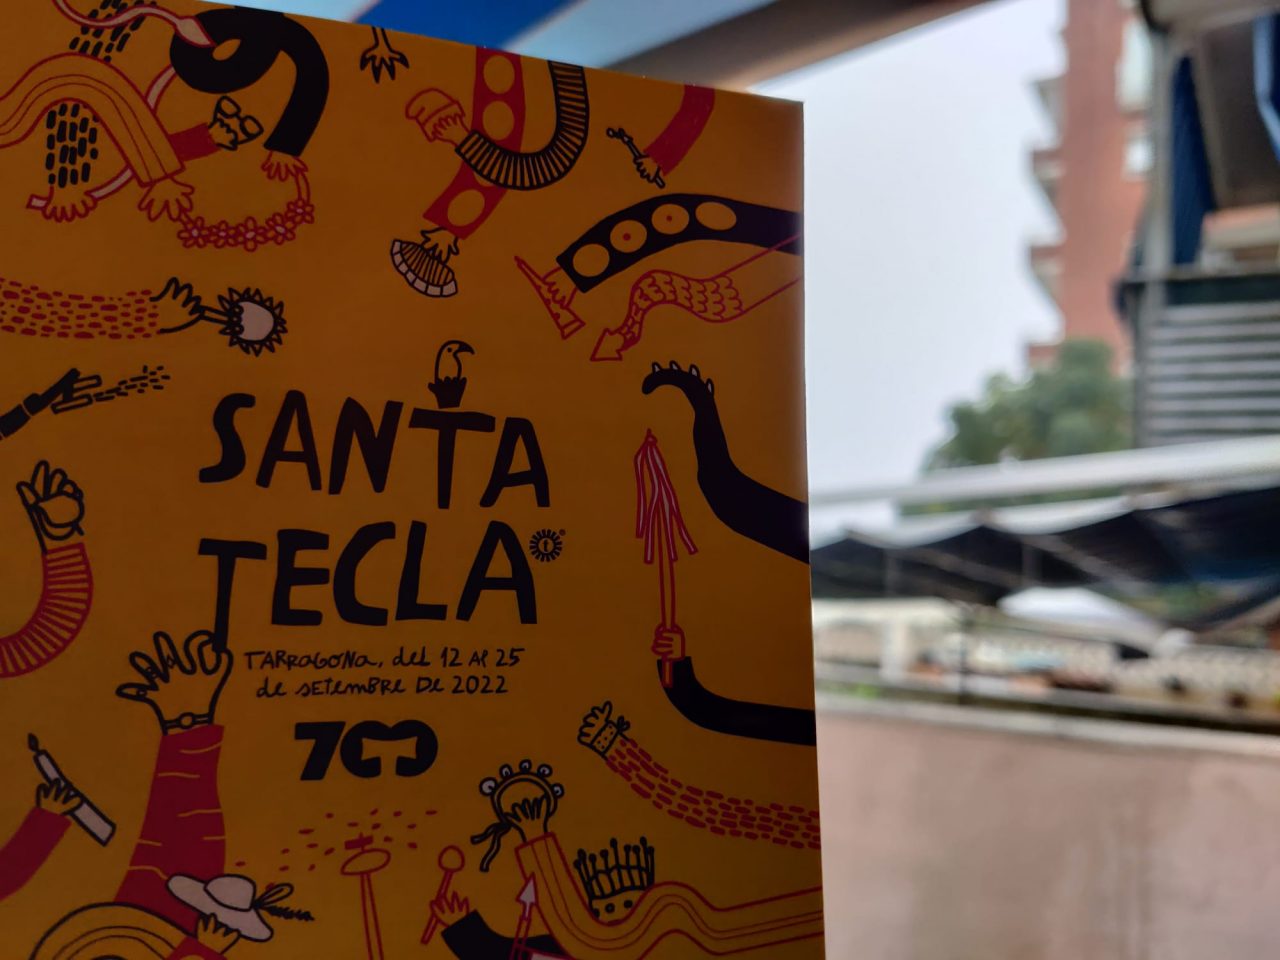 Santa-Tecla-1-1280x960.jpg